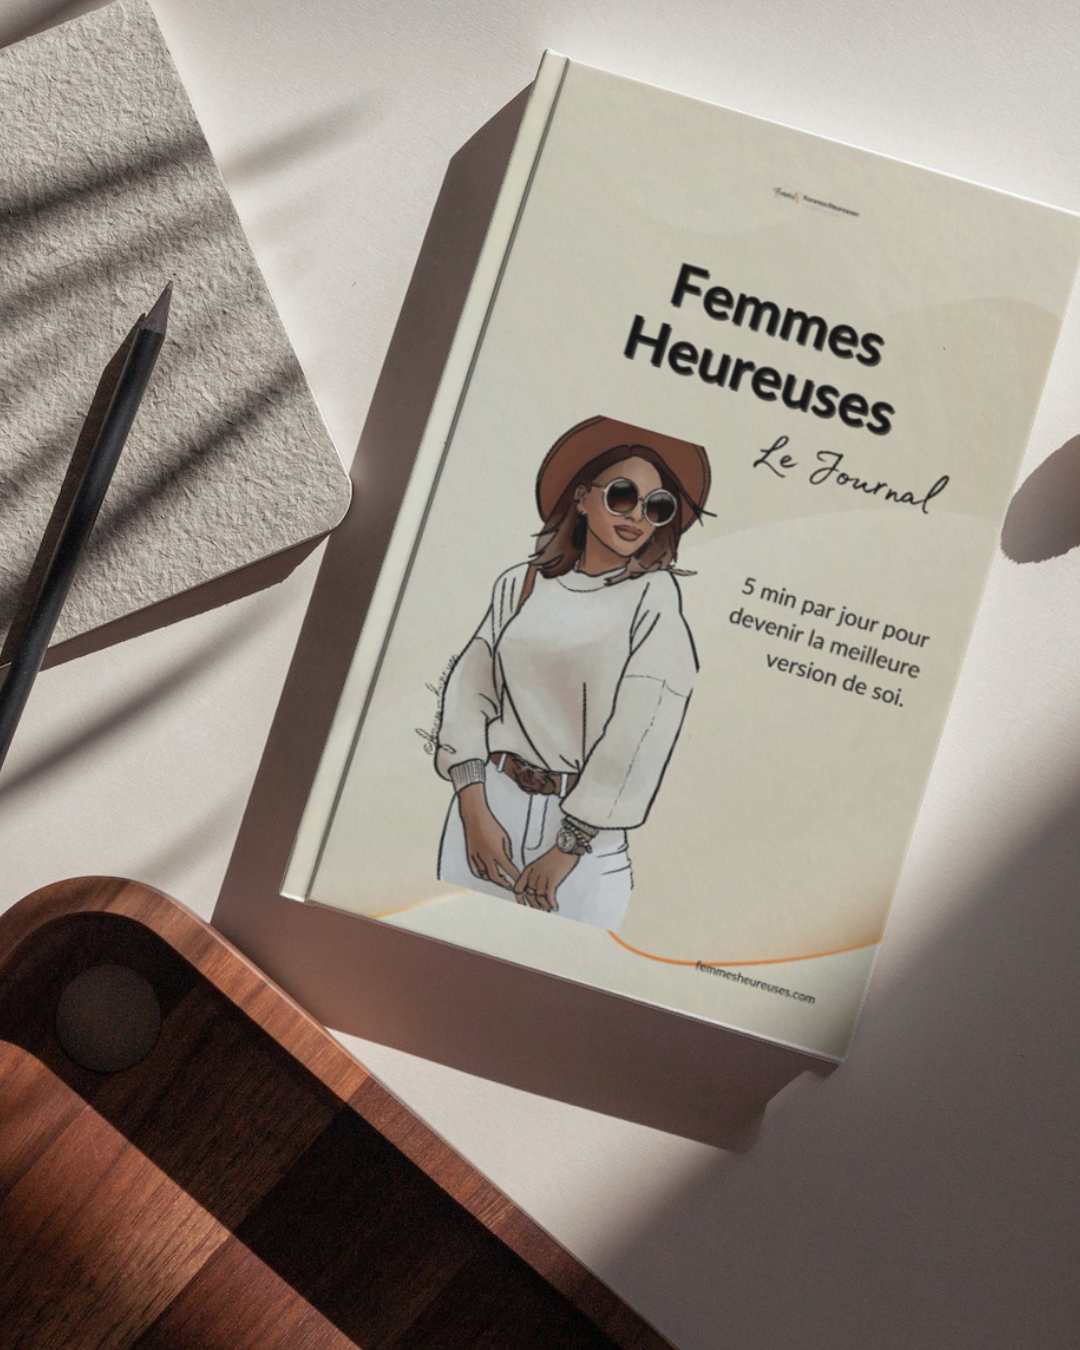 Femmes Heureuses - Le Journal